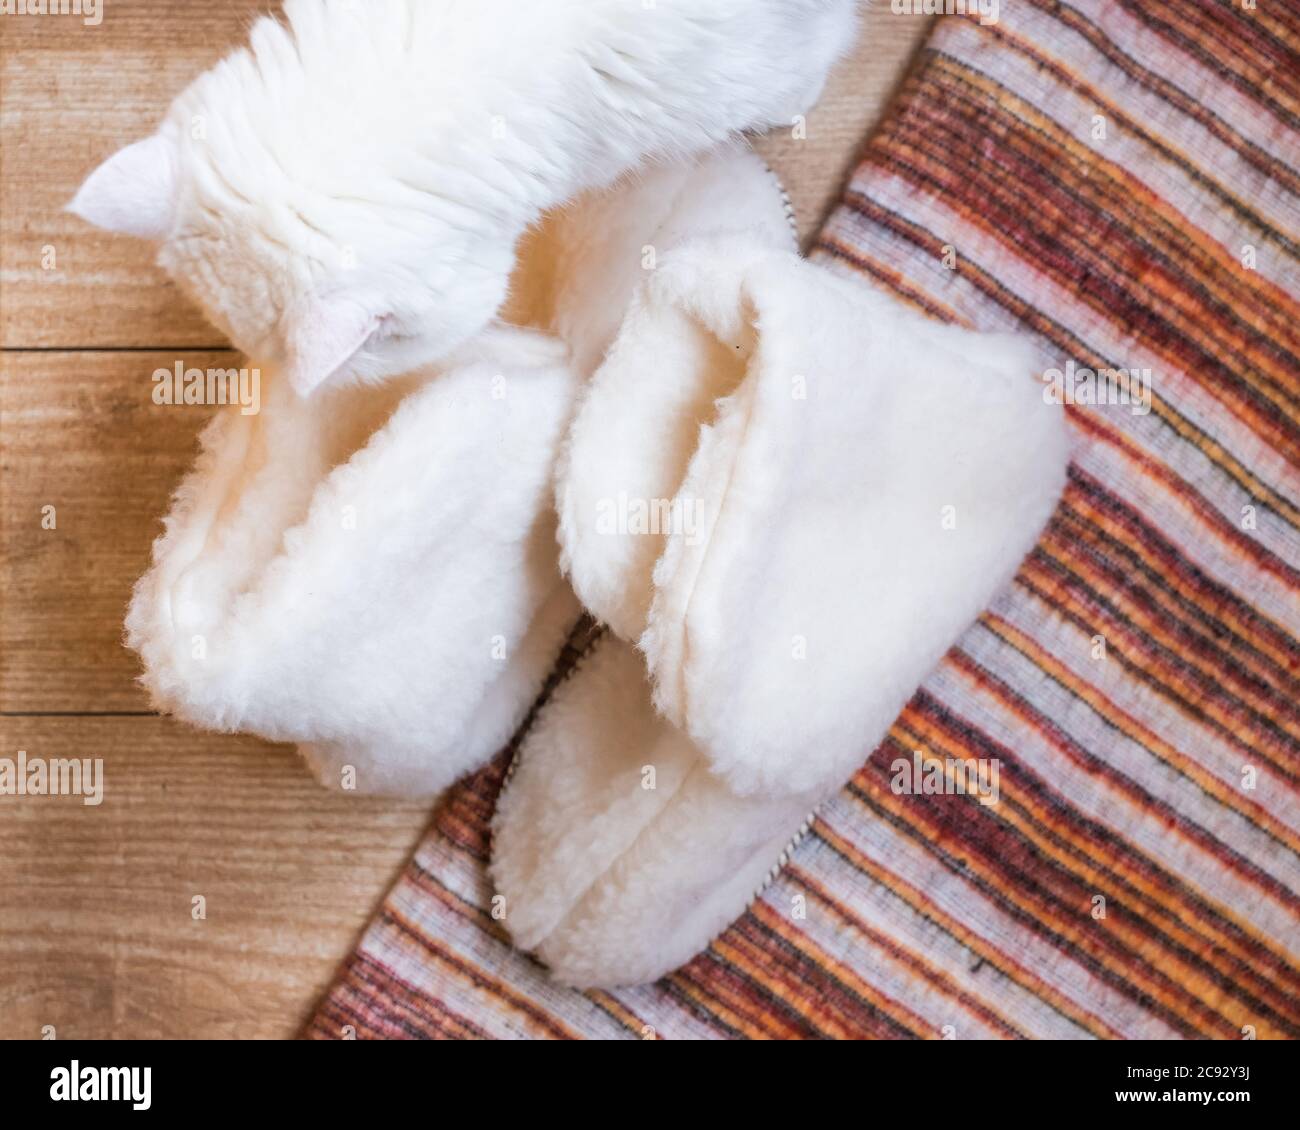 Fluffy white furry fabric Stock Photo - Alamy